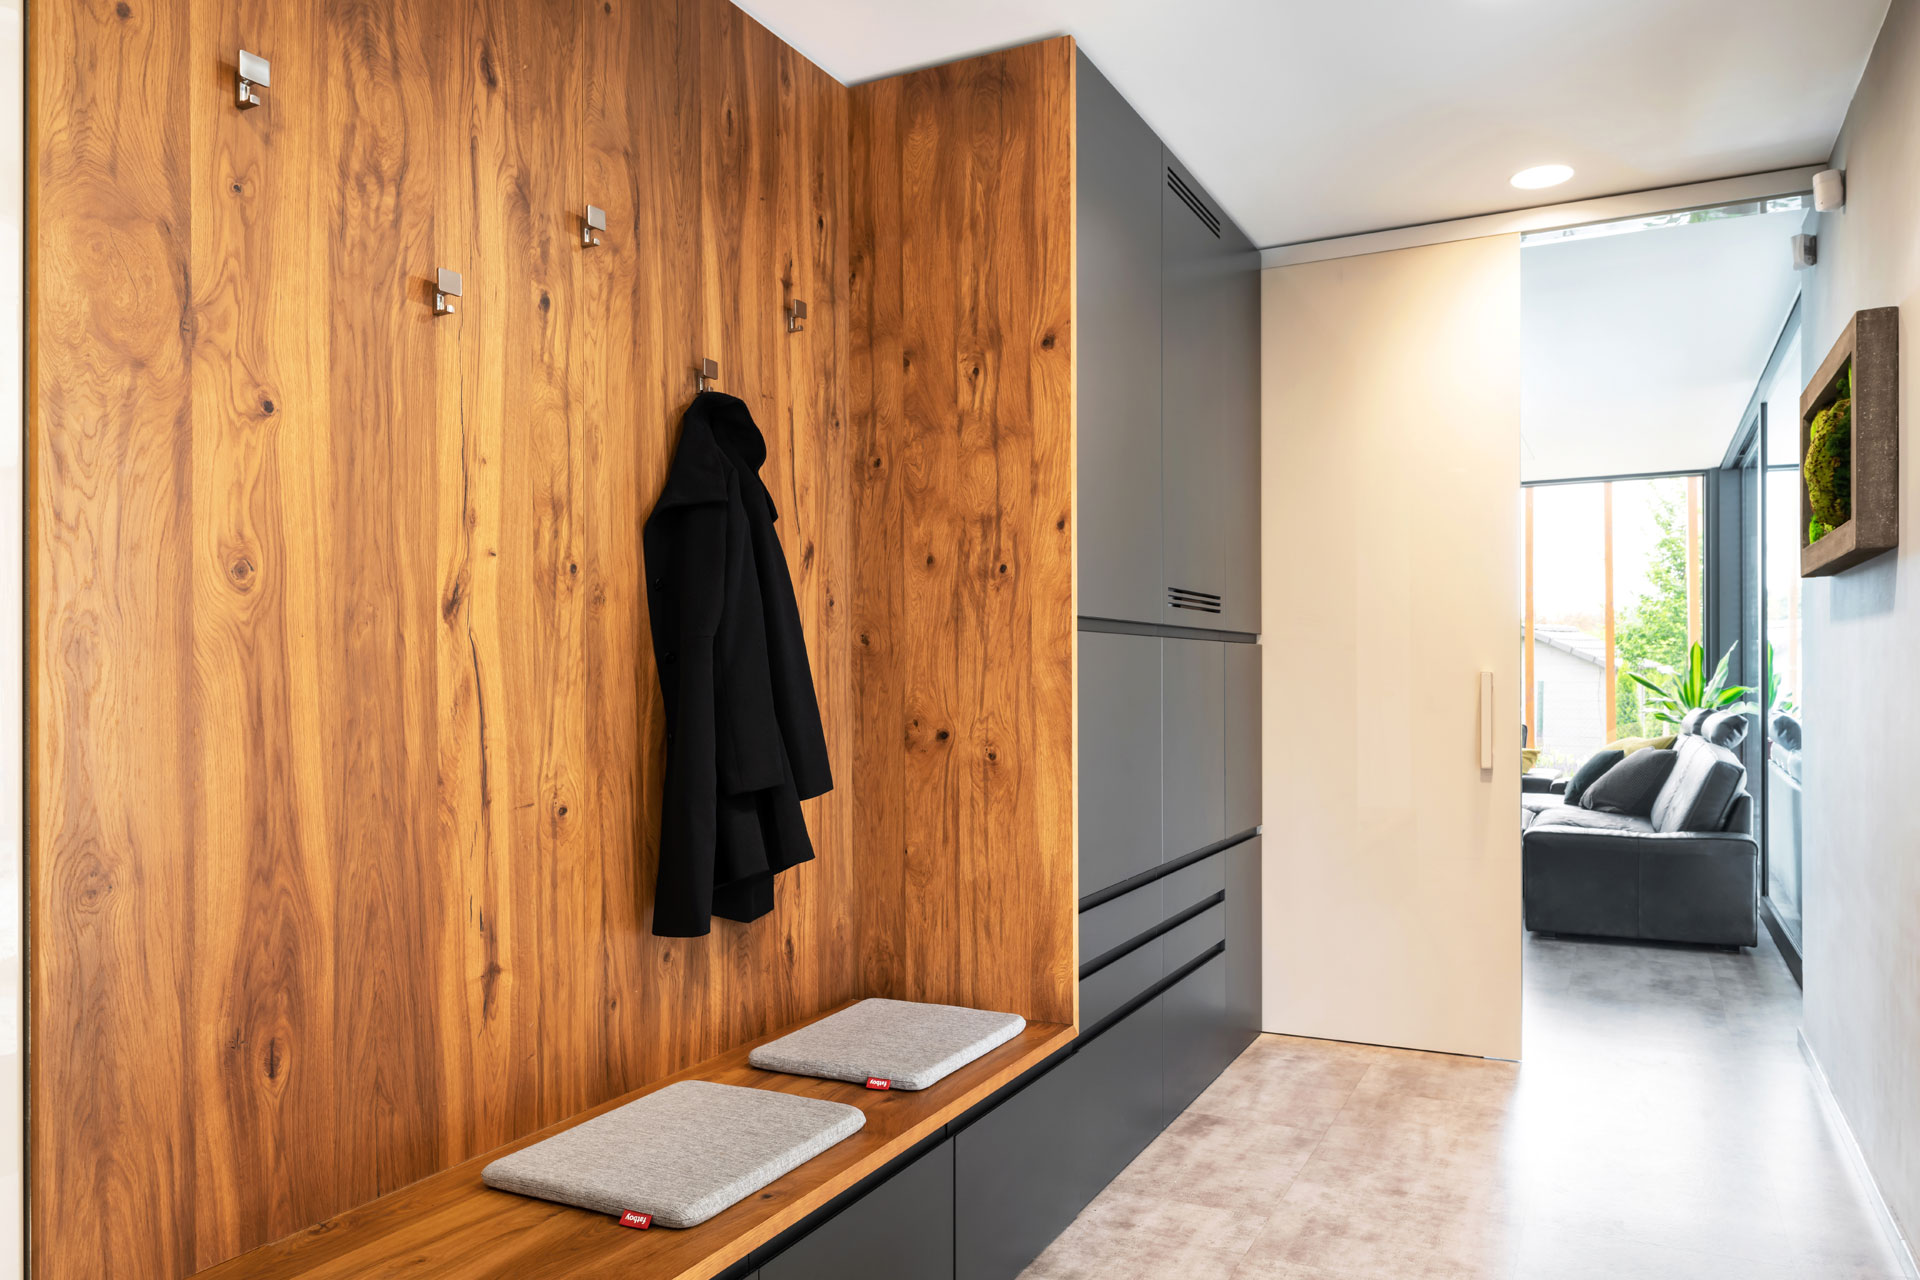 Hanák furniture Realization of interior Wardrobe Closets